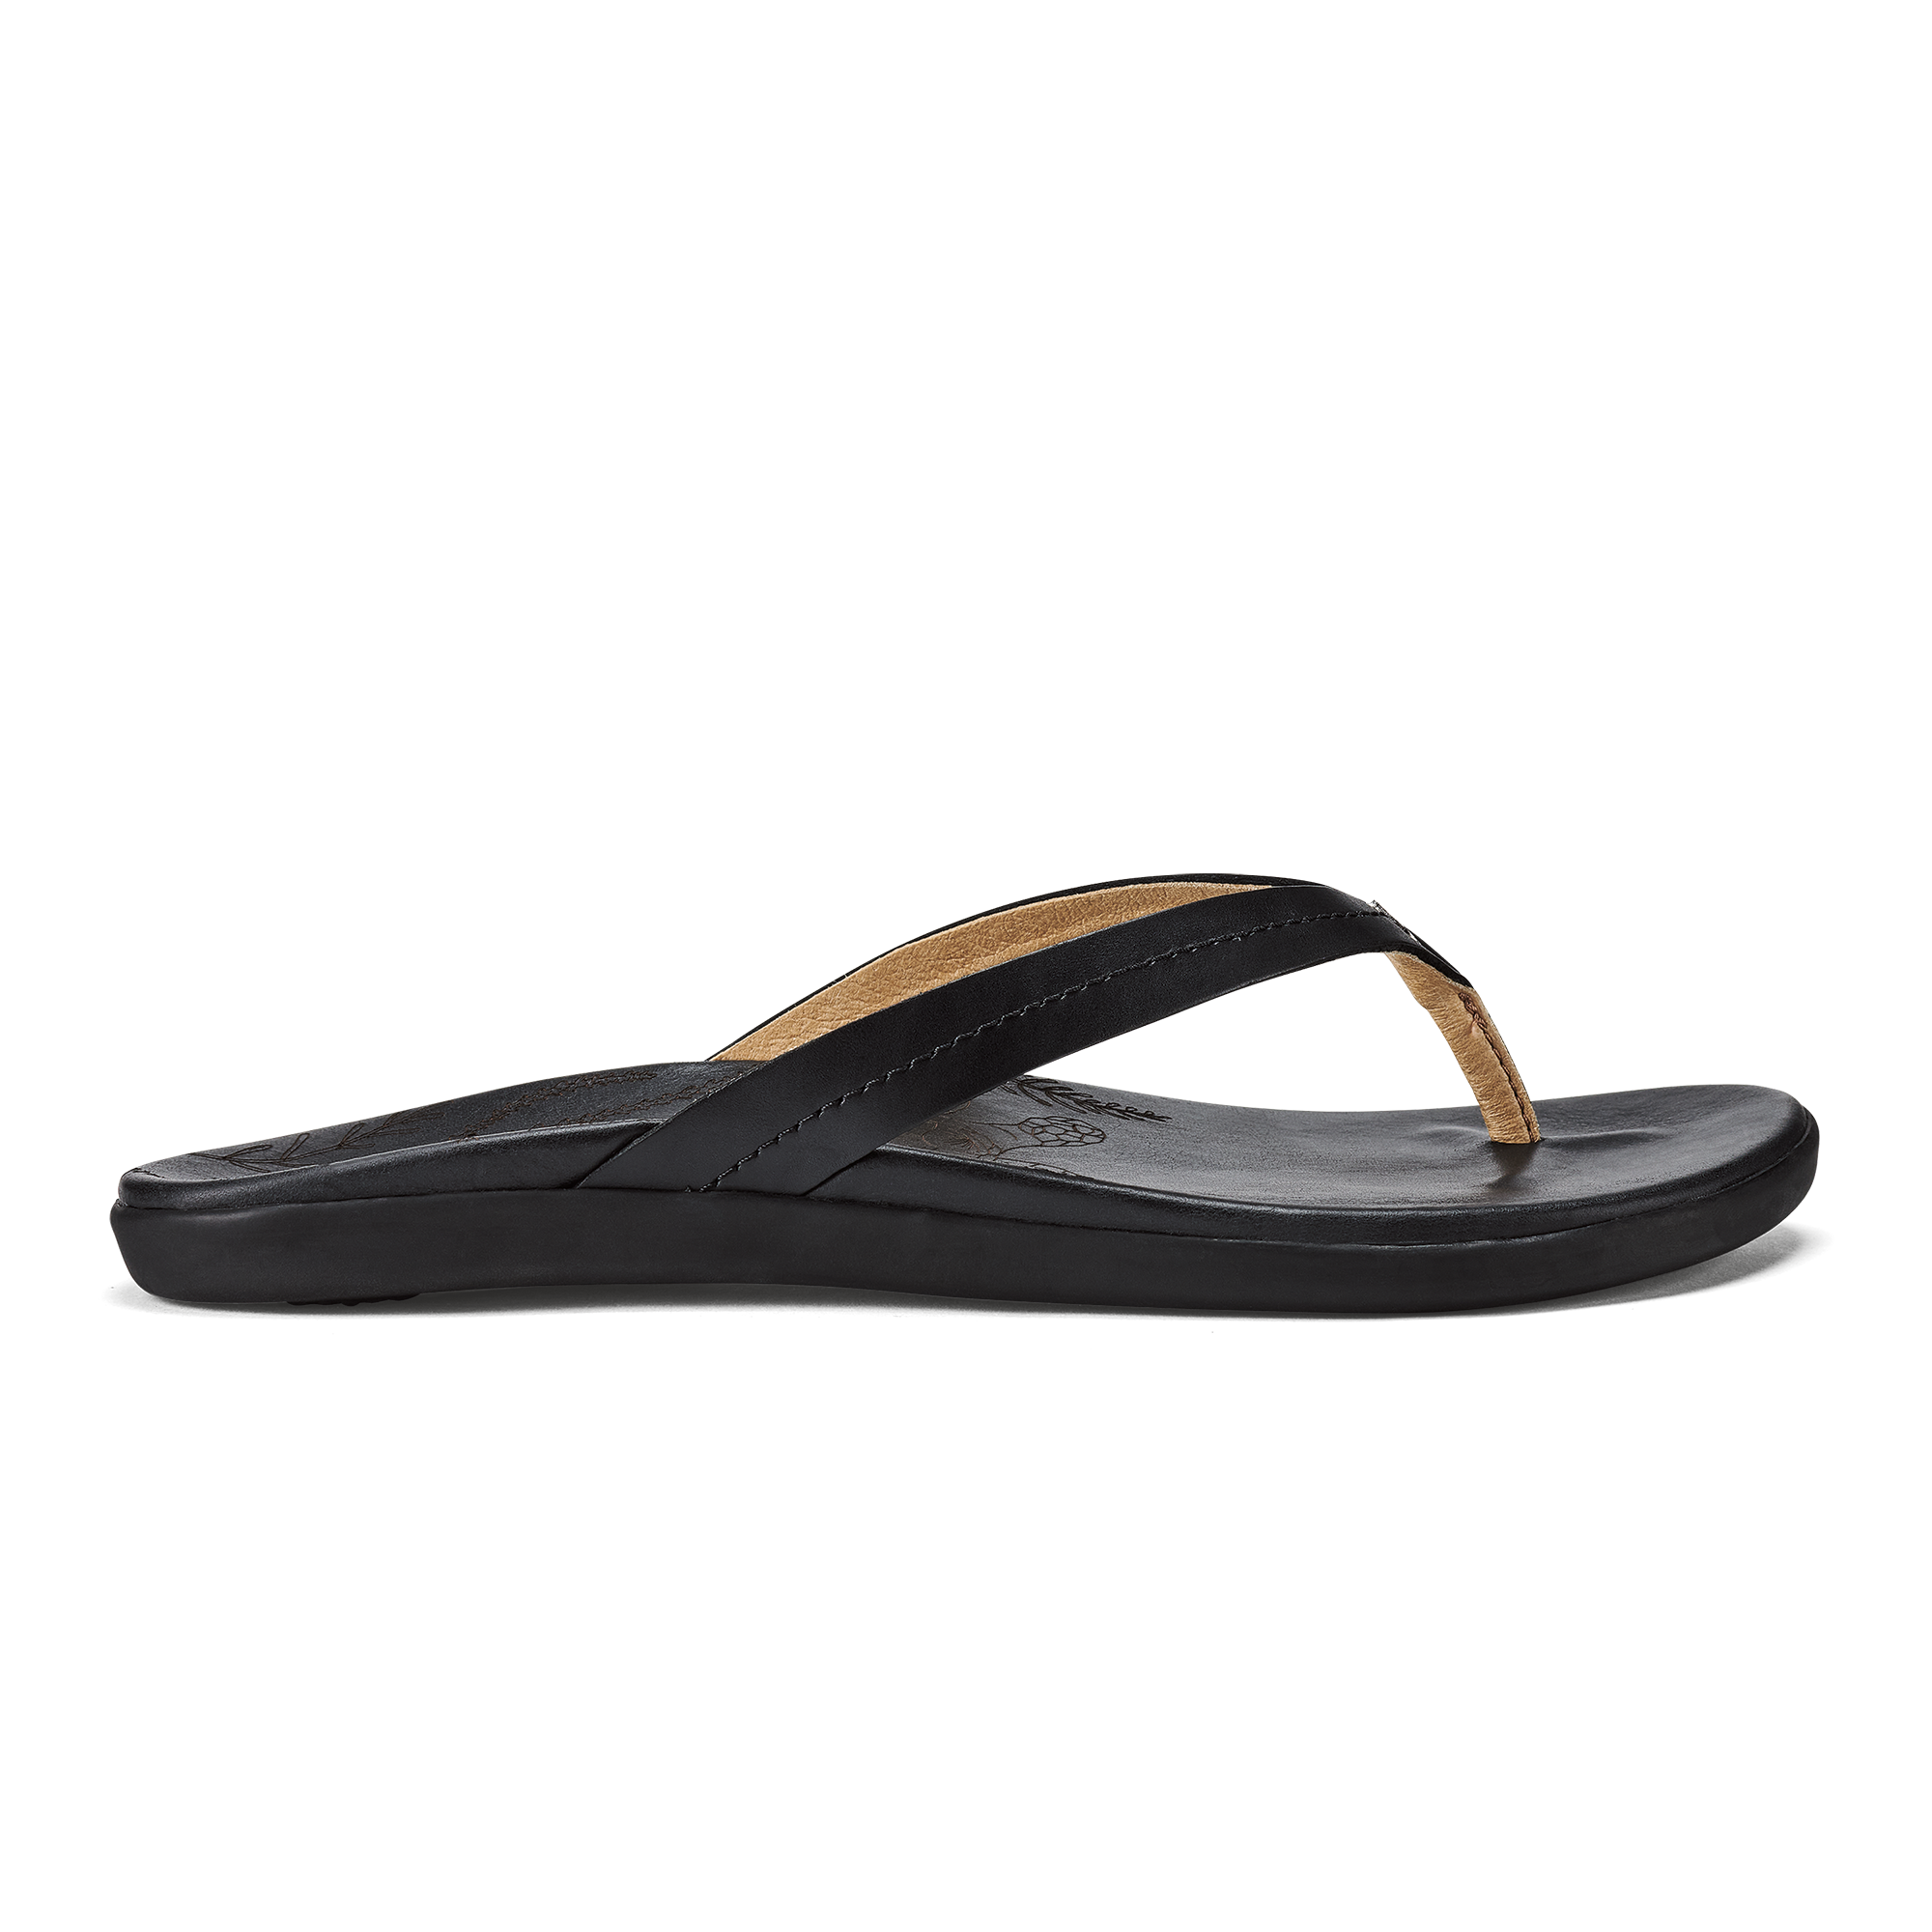 Our 10 Favorite Leather Sandals for Men & Women – OluKai